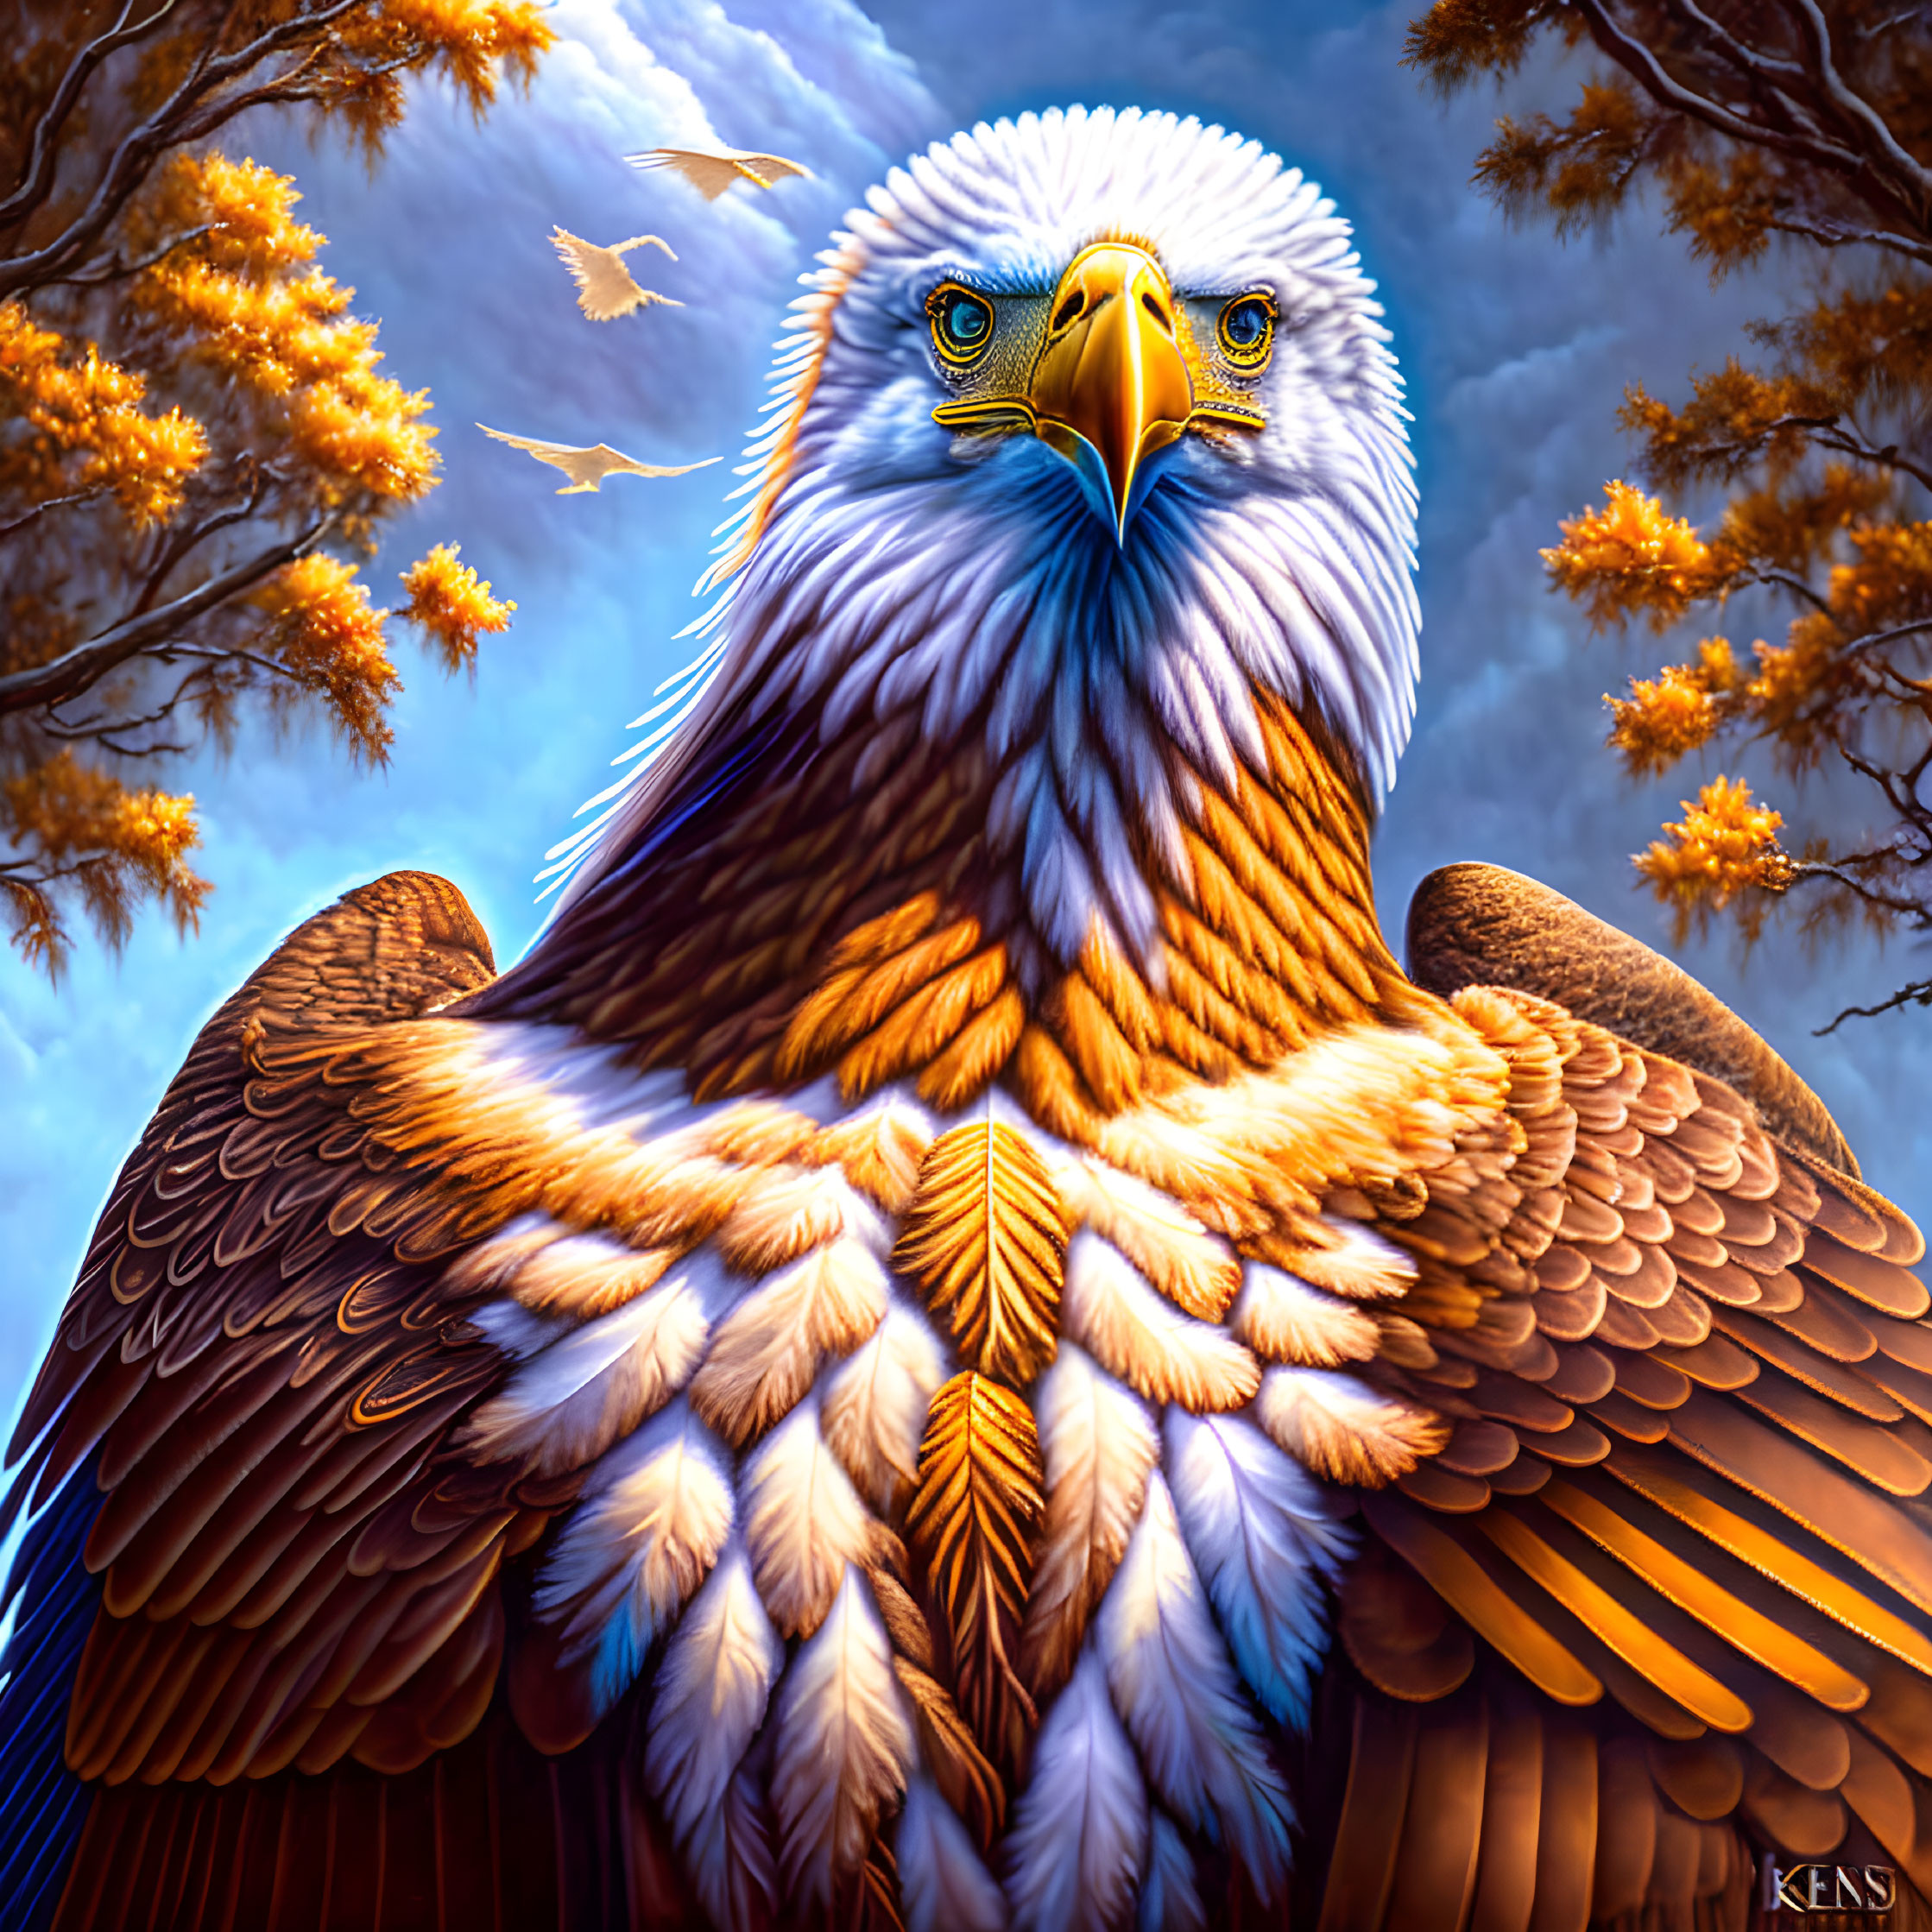 The Spirit Eagle